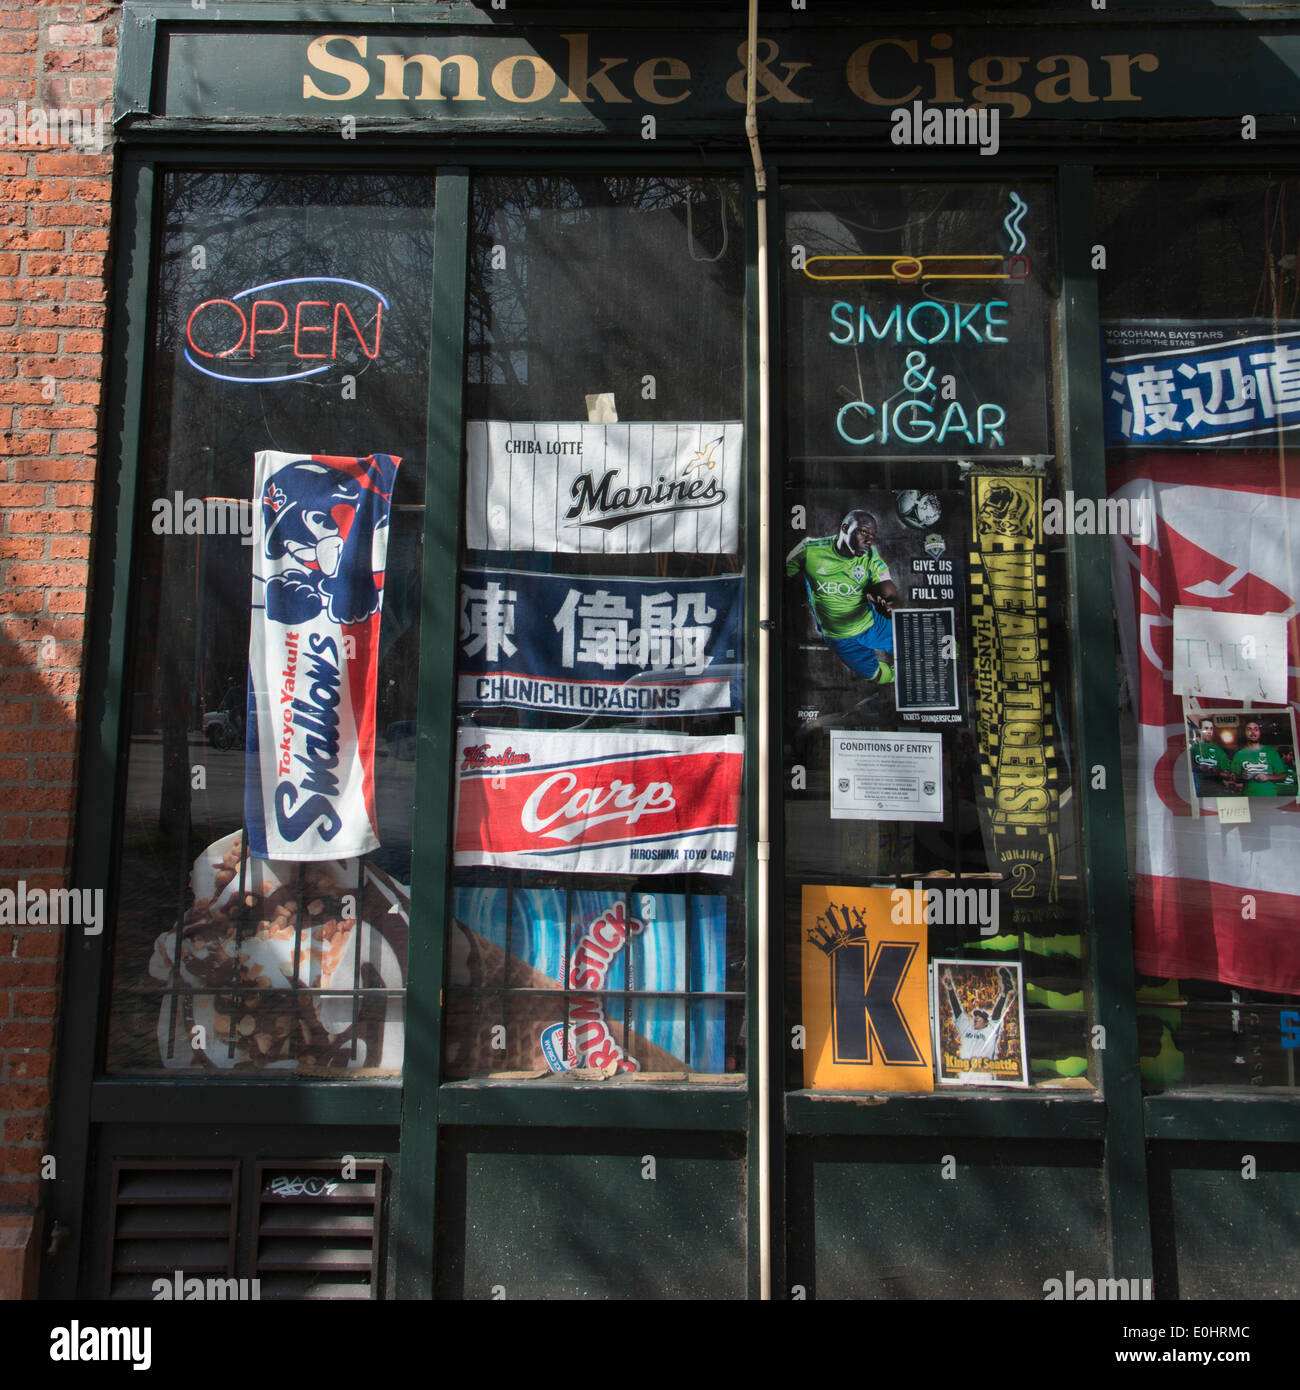 Smoke and cigar shop, Seattle, Washington State, USA Stock Photo